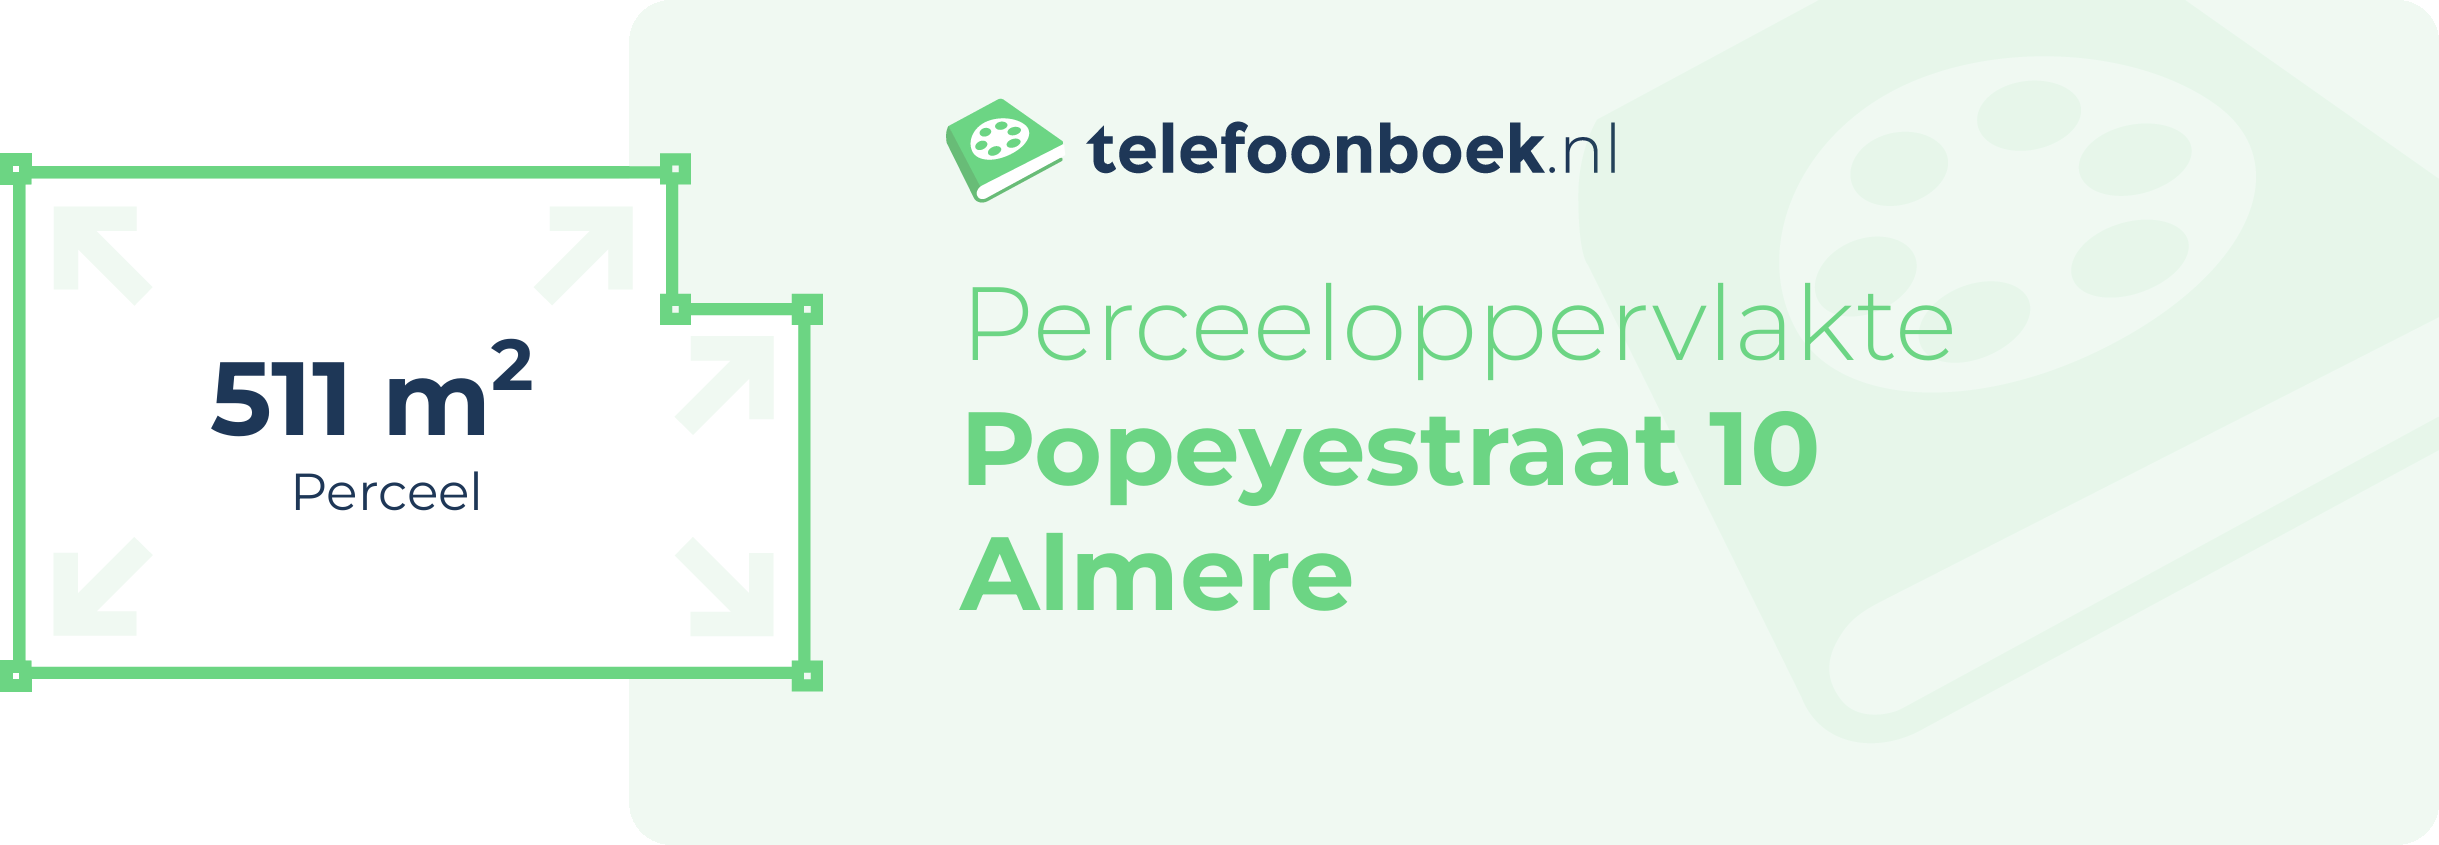 Perceeloppervlakte Popeyestraat 10 Almere